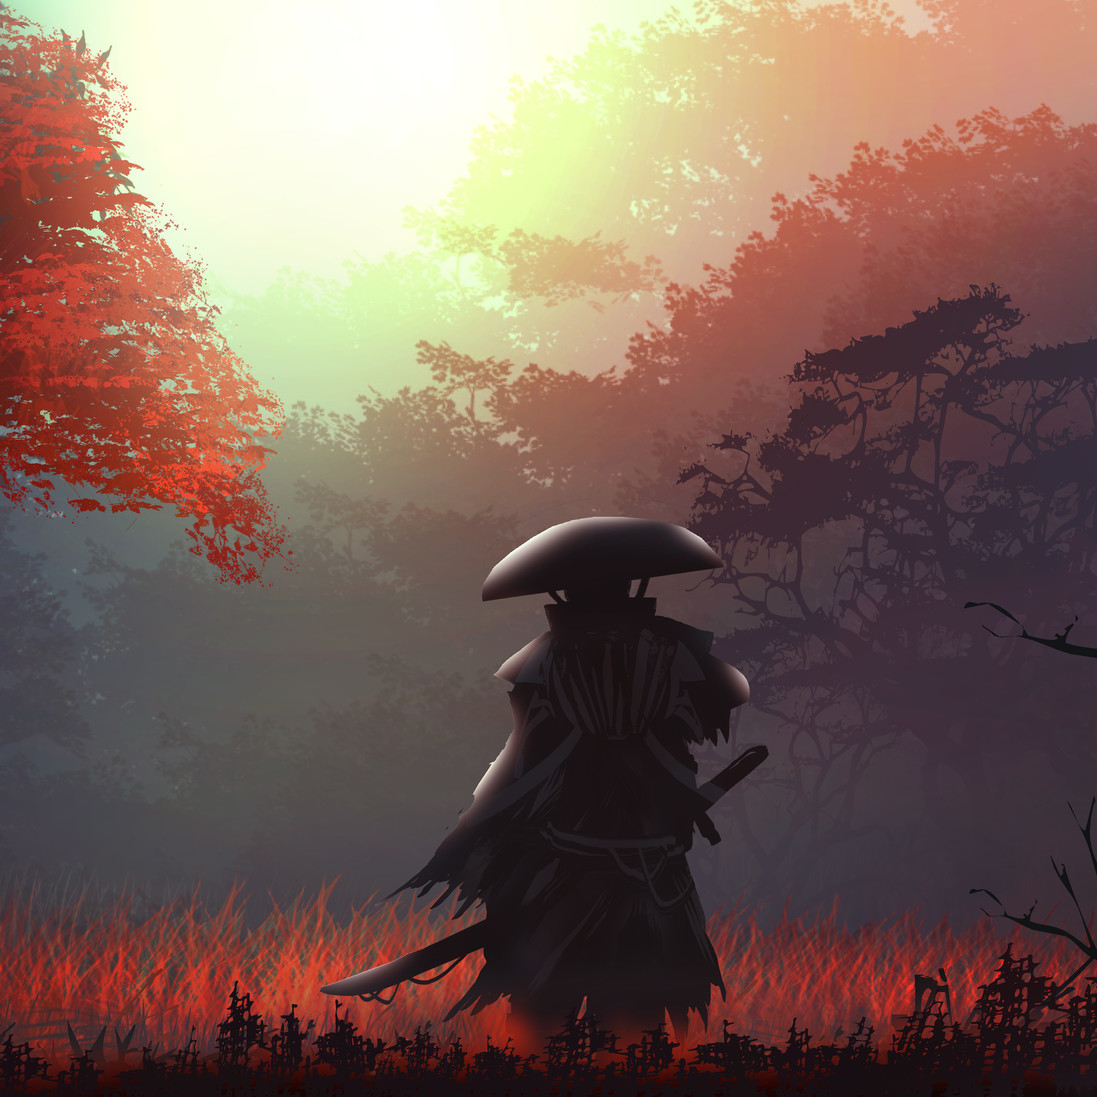 Samurai in Autumn by John Sommo